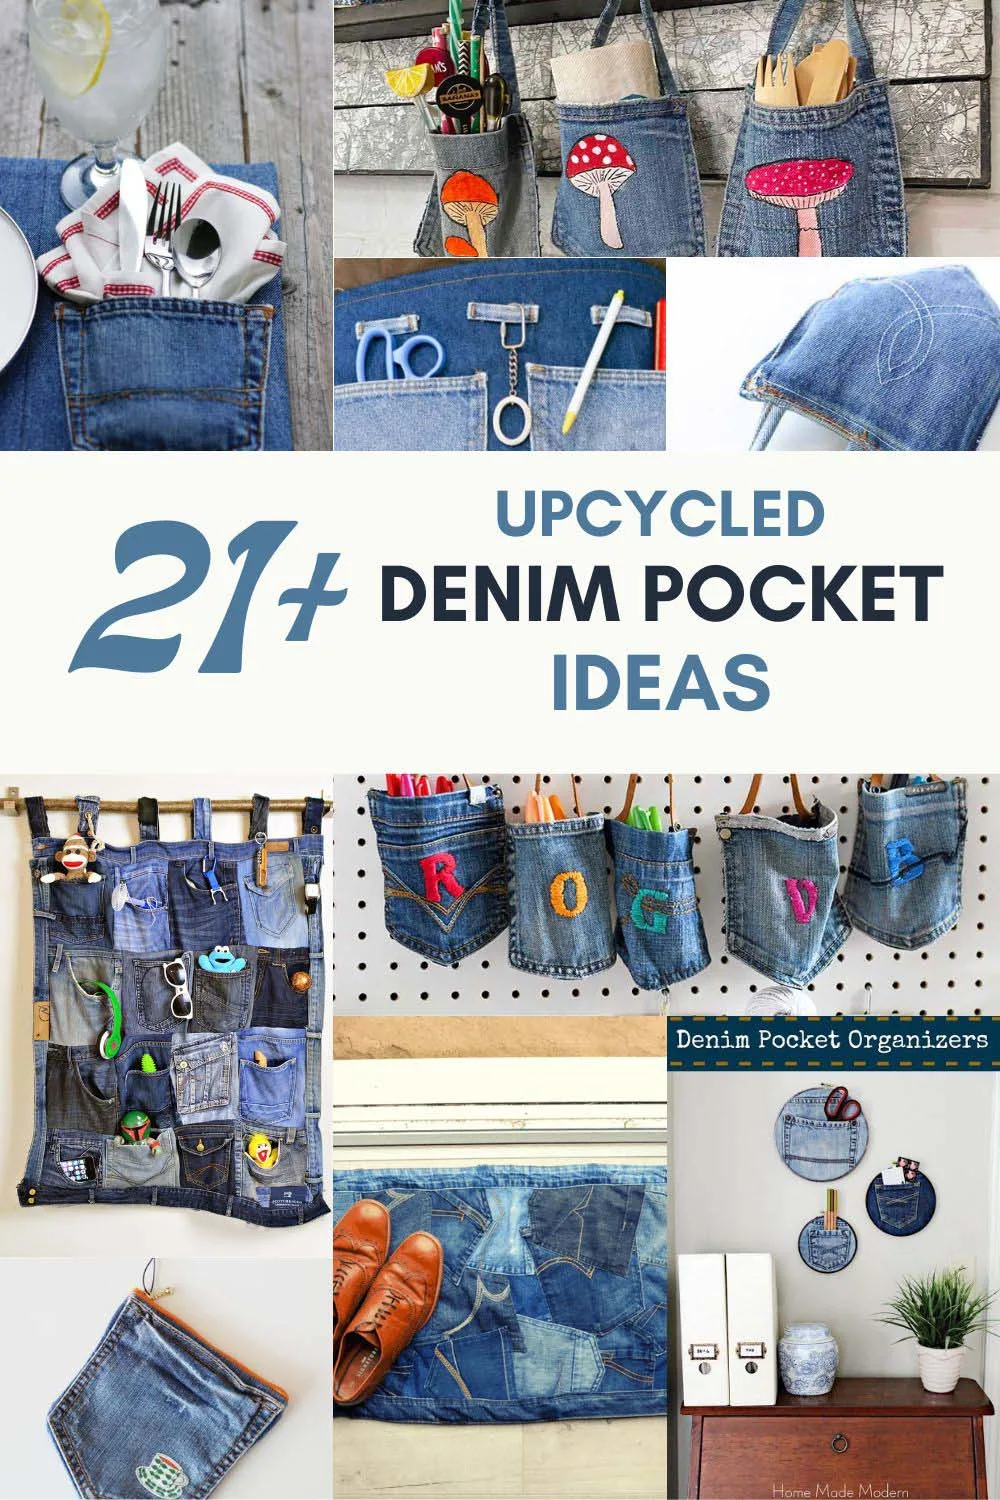 Reusable gift bags - Make it in denim